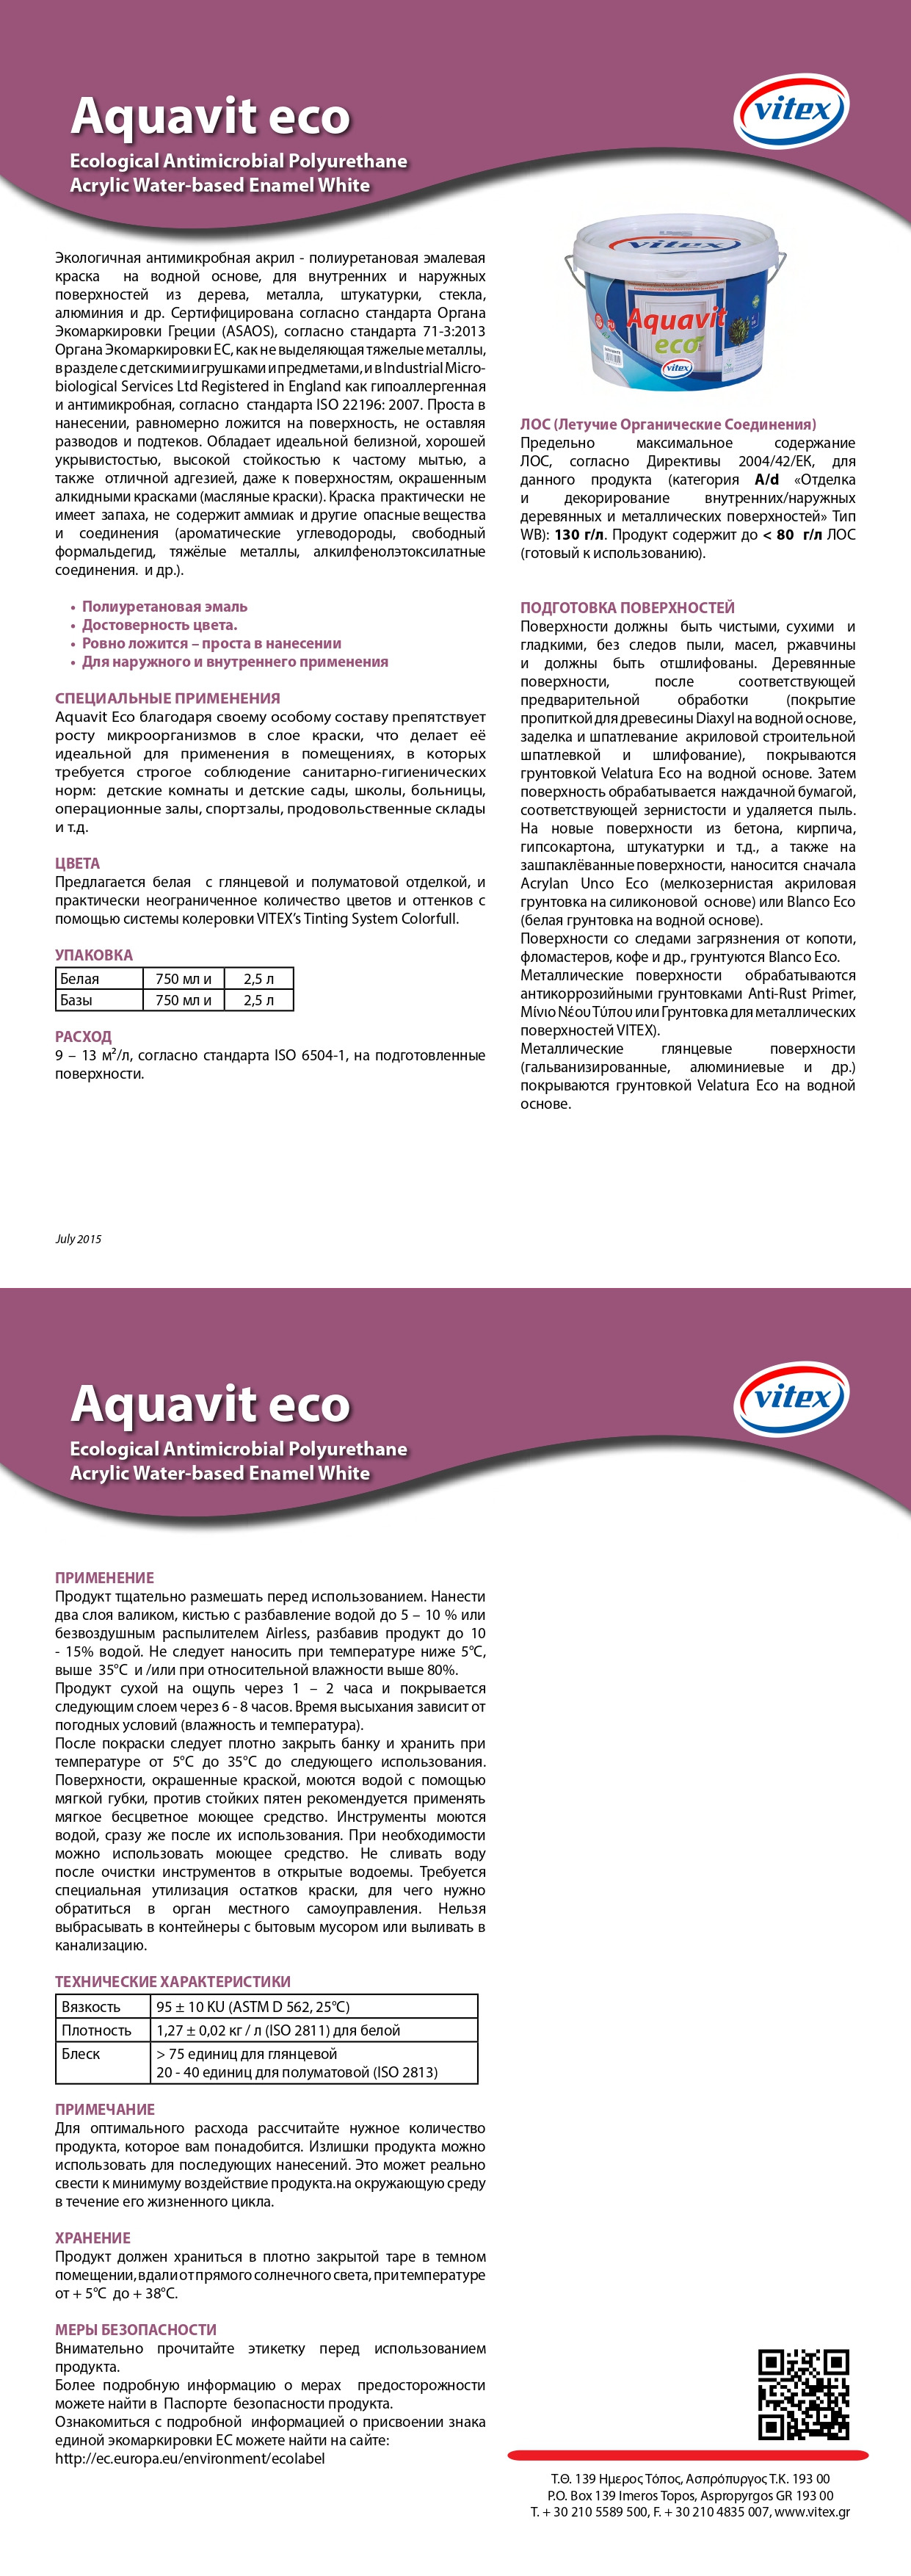 ЭКО-Aquavit описание